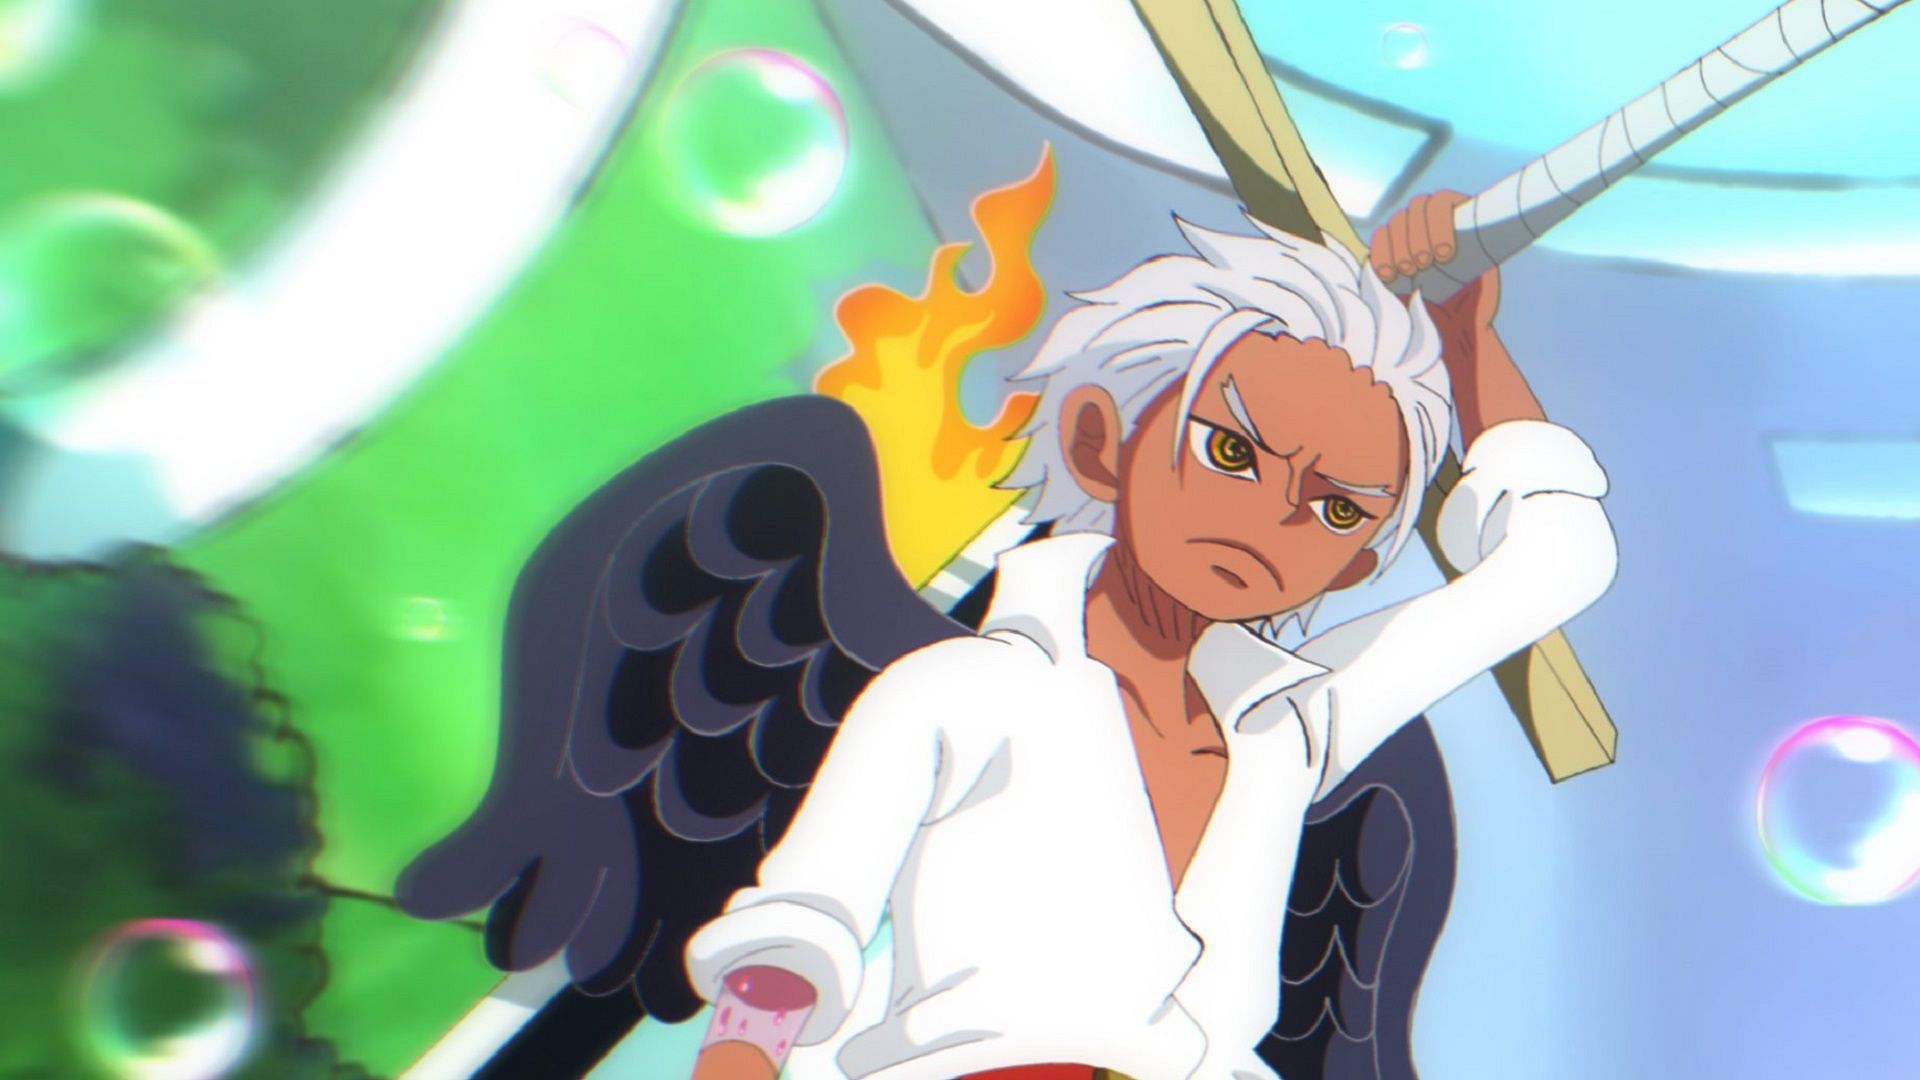 S-Hawk as seen in One Piece (Image via Eiichiro Oda/Shueisha, One Piece)